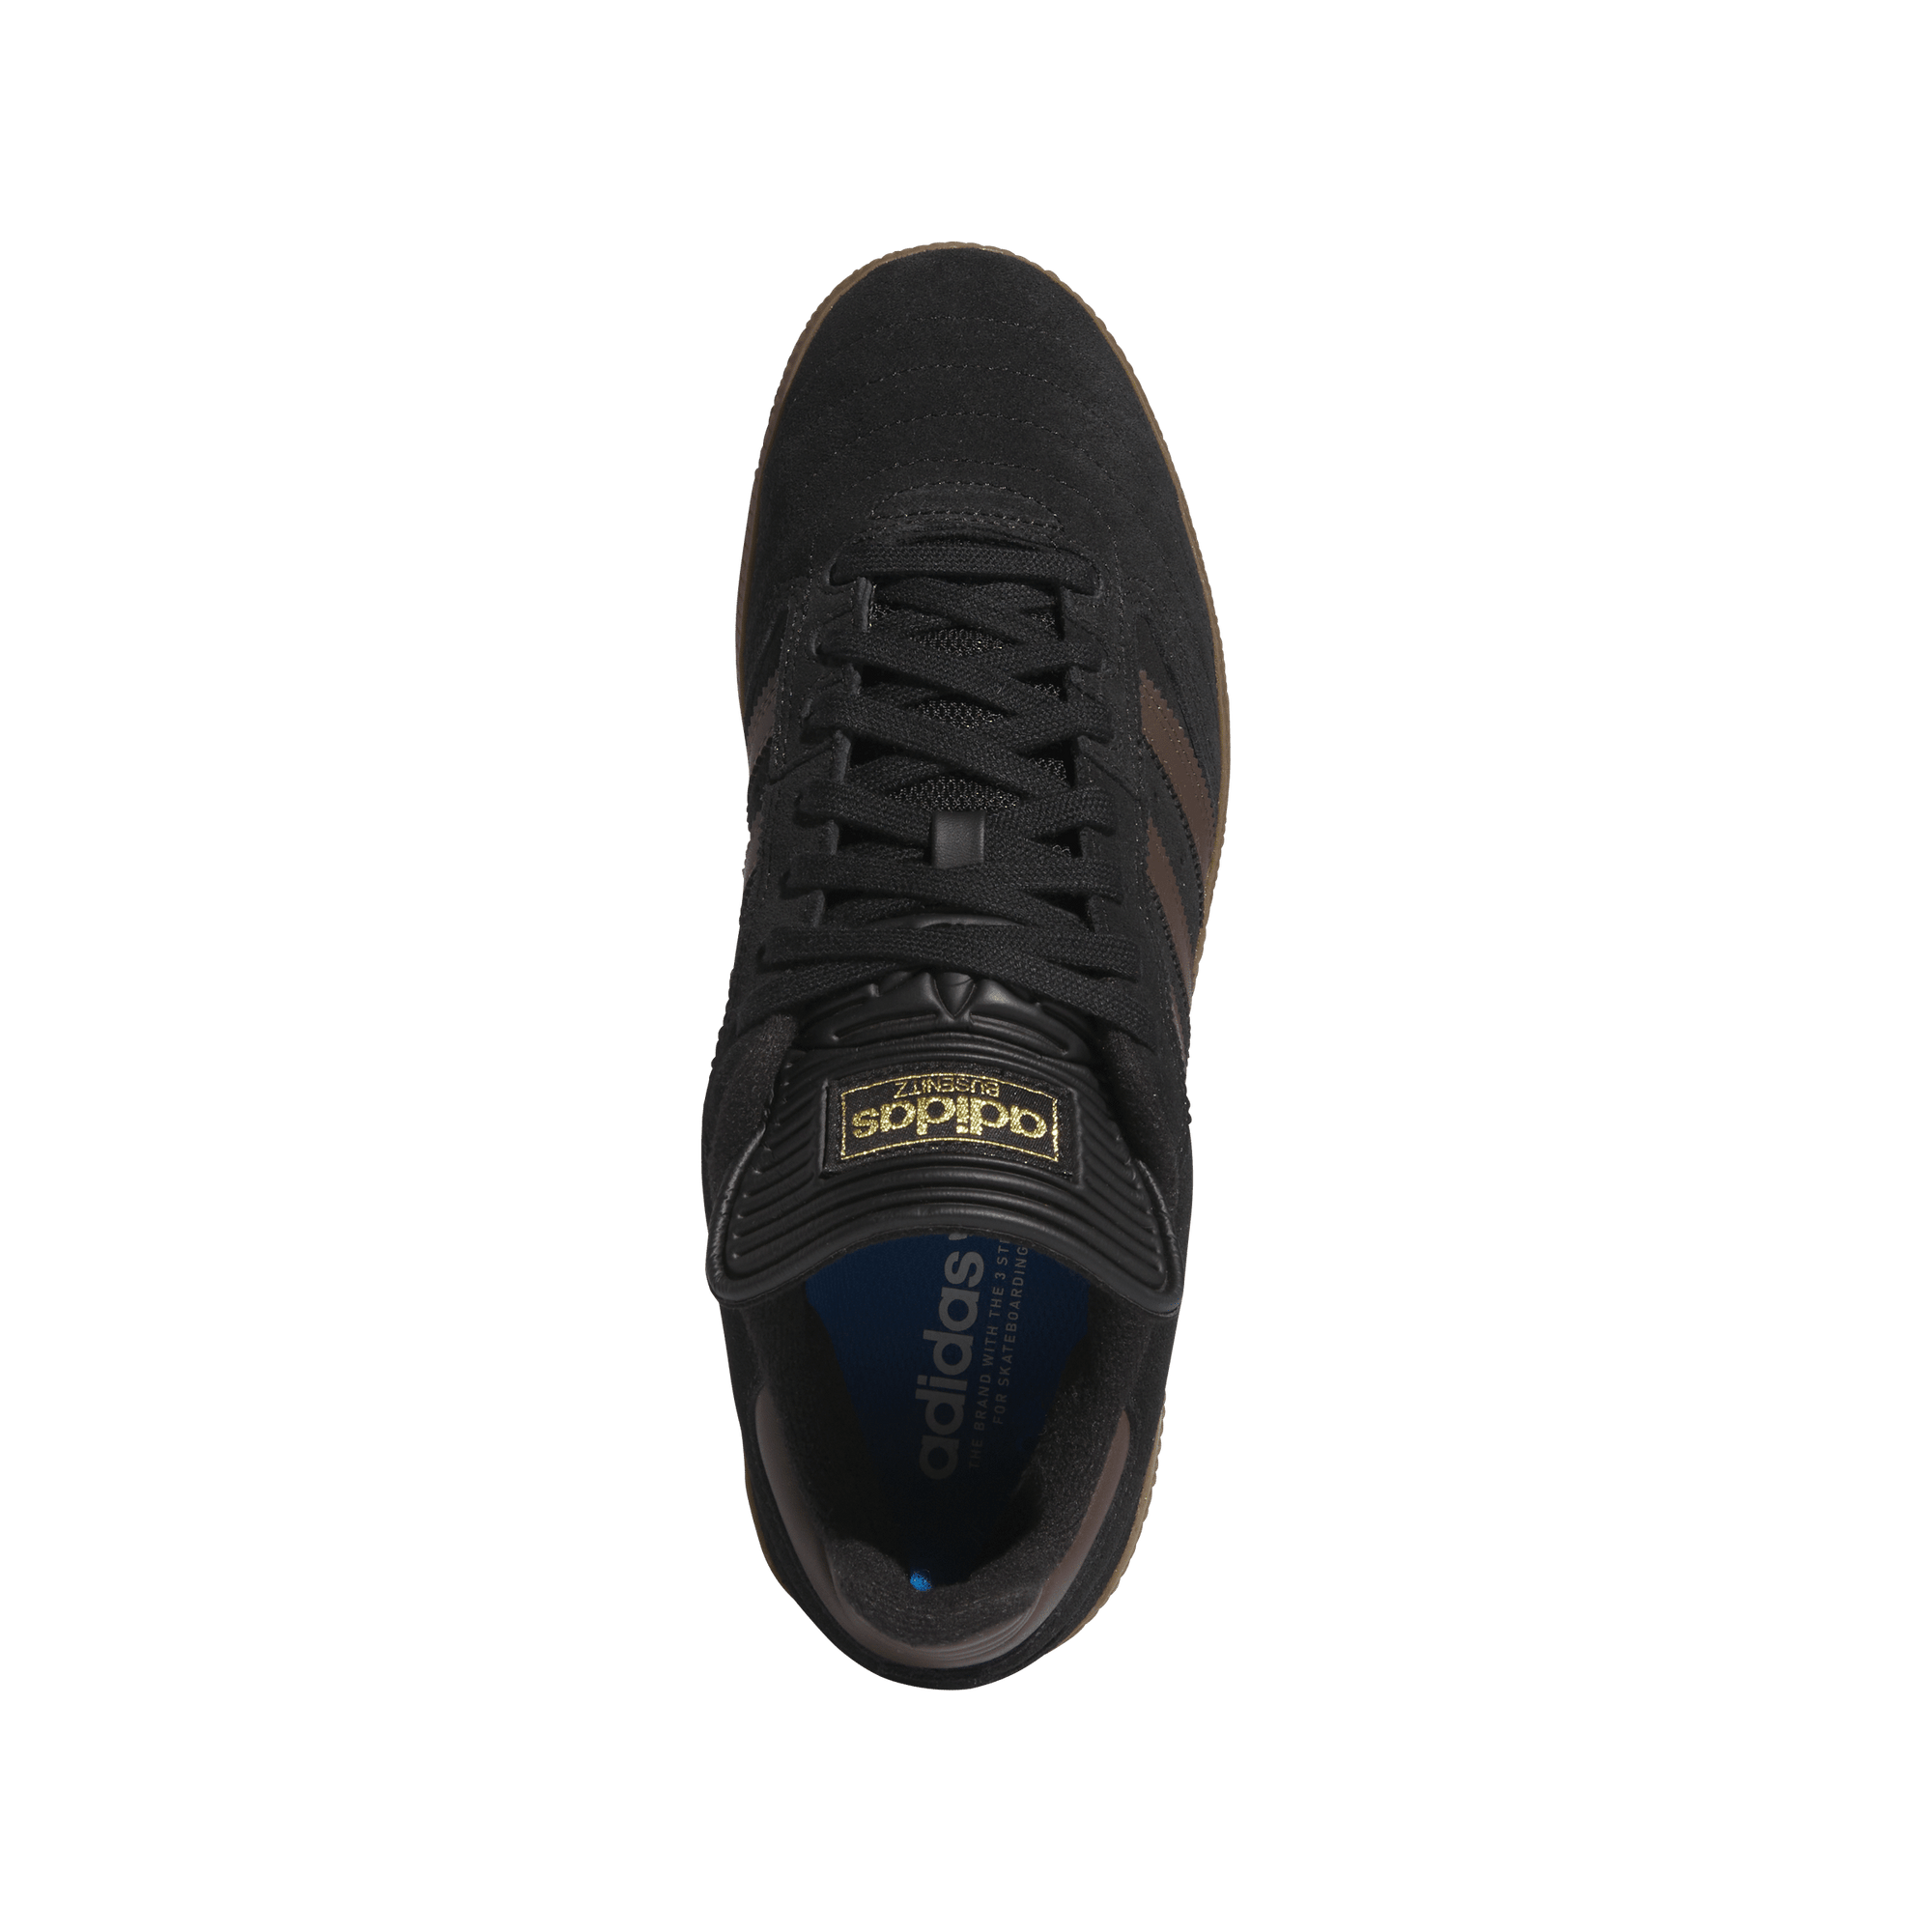 ADIDAS Busenitz Pro Shoes Core Black/Brown/Gold Metallic Men's Skate Shoes Adidas 